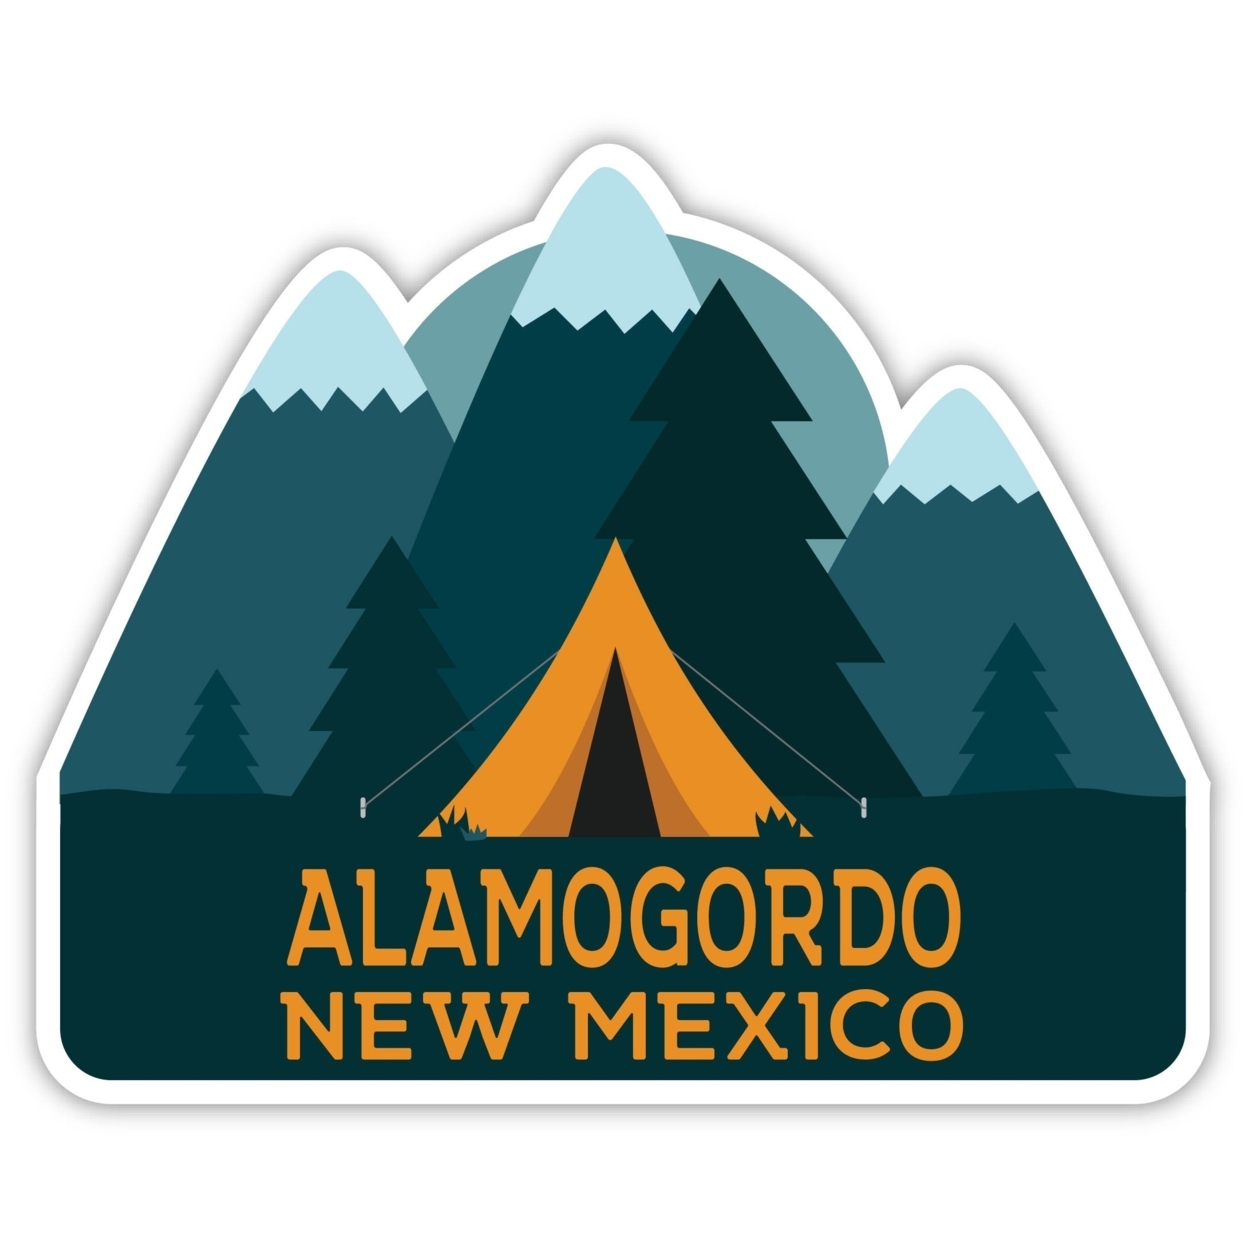 Alamogordo New Mexico Souvenir Decorative Stickers (Choose Theme And Size) - Single Unit, 2-Inch, Camp Life